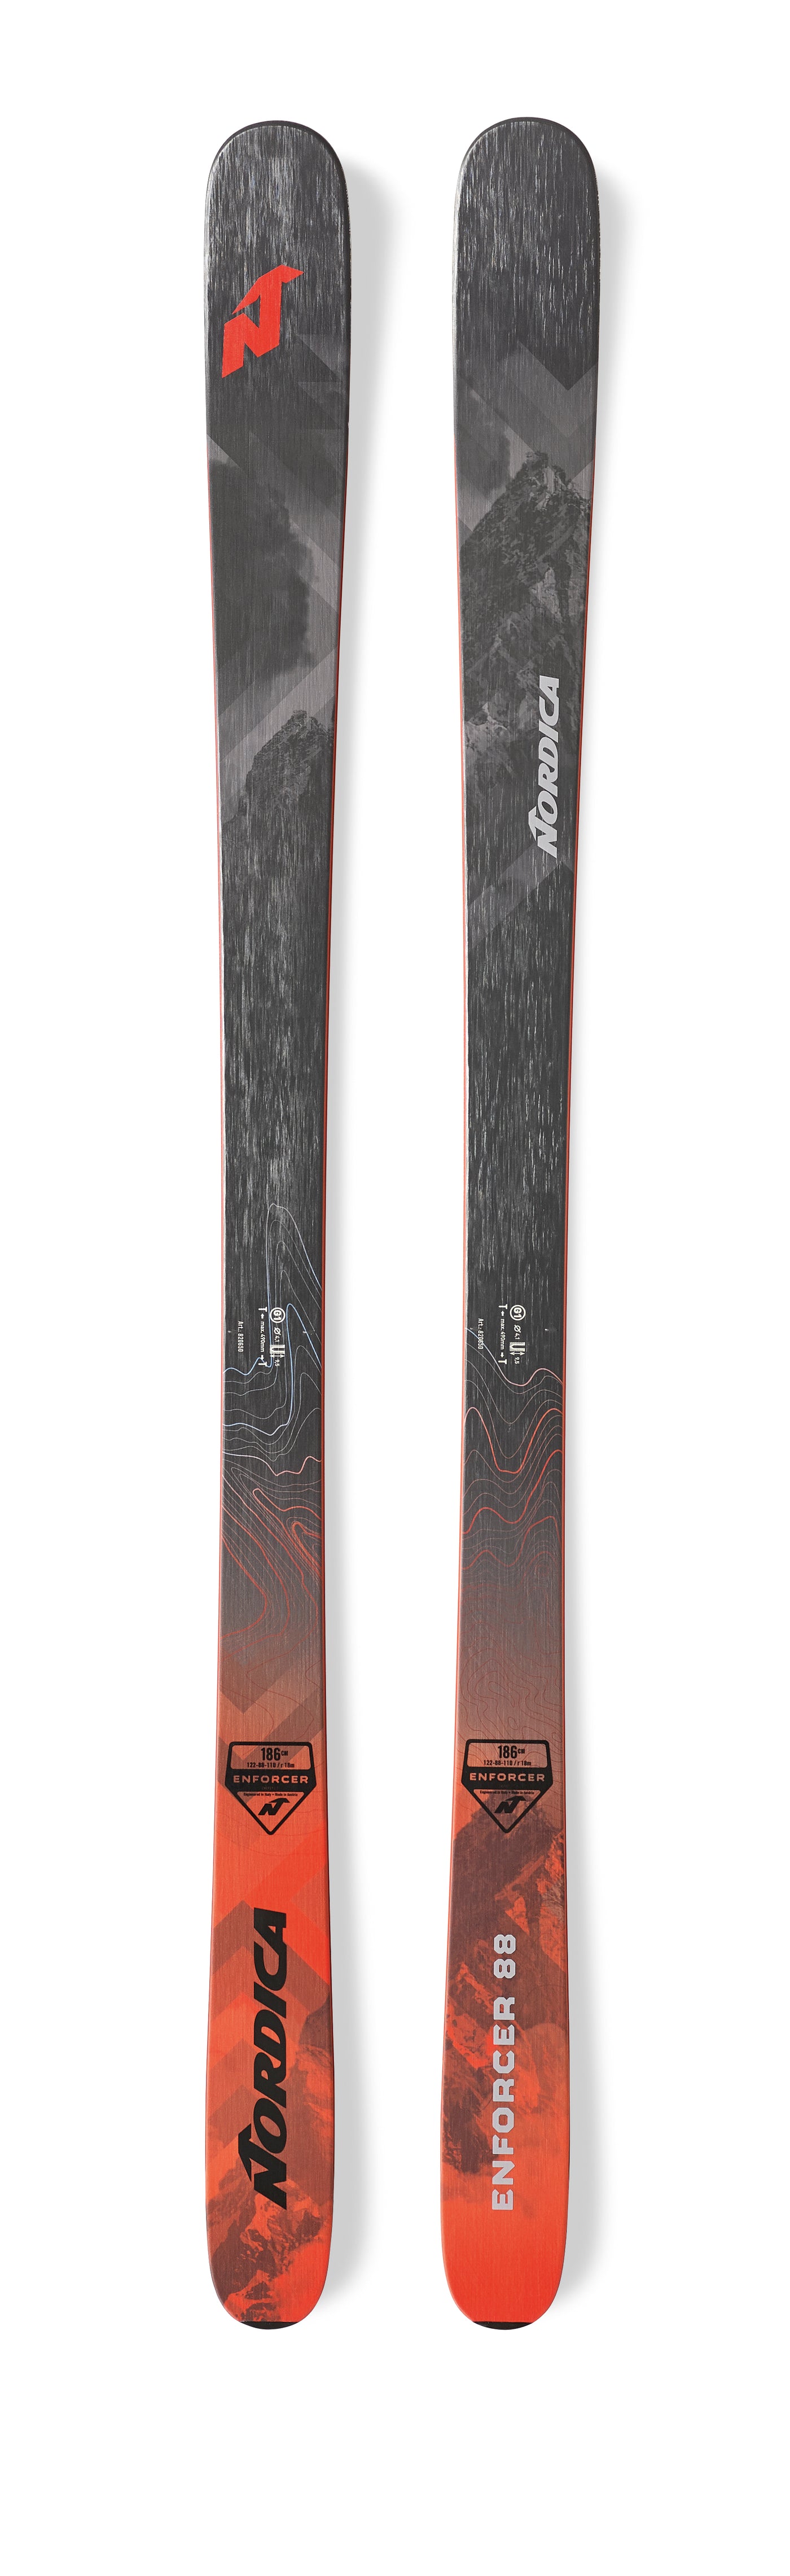 2020 Nordica Enforcer 88 snow skis - ProSkiGuy your Hometown Ski Shop on the web